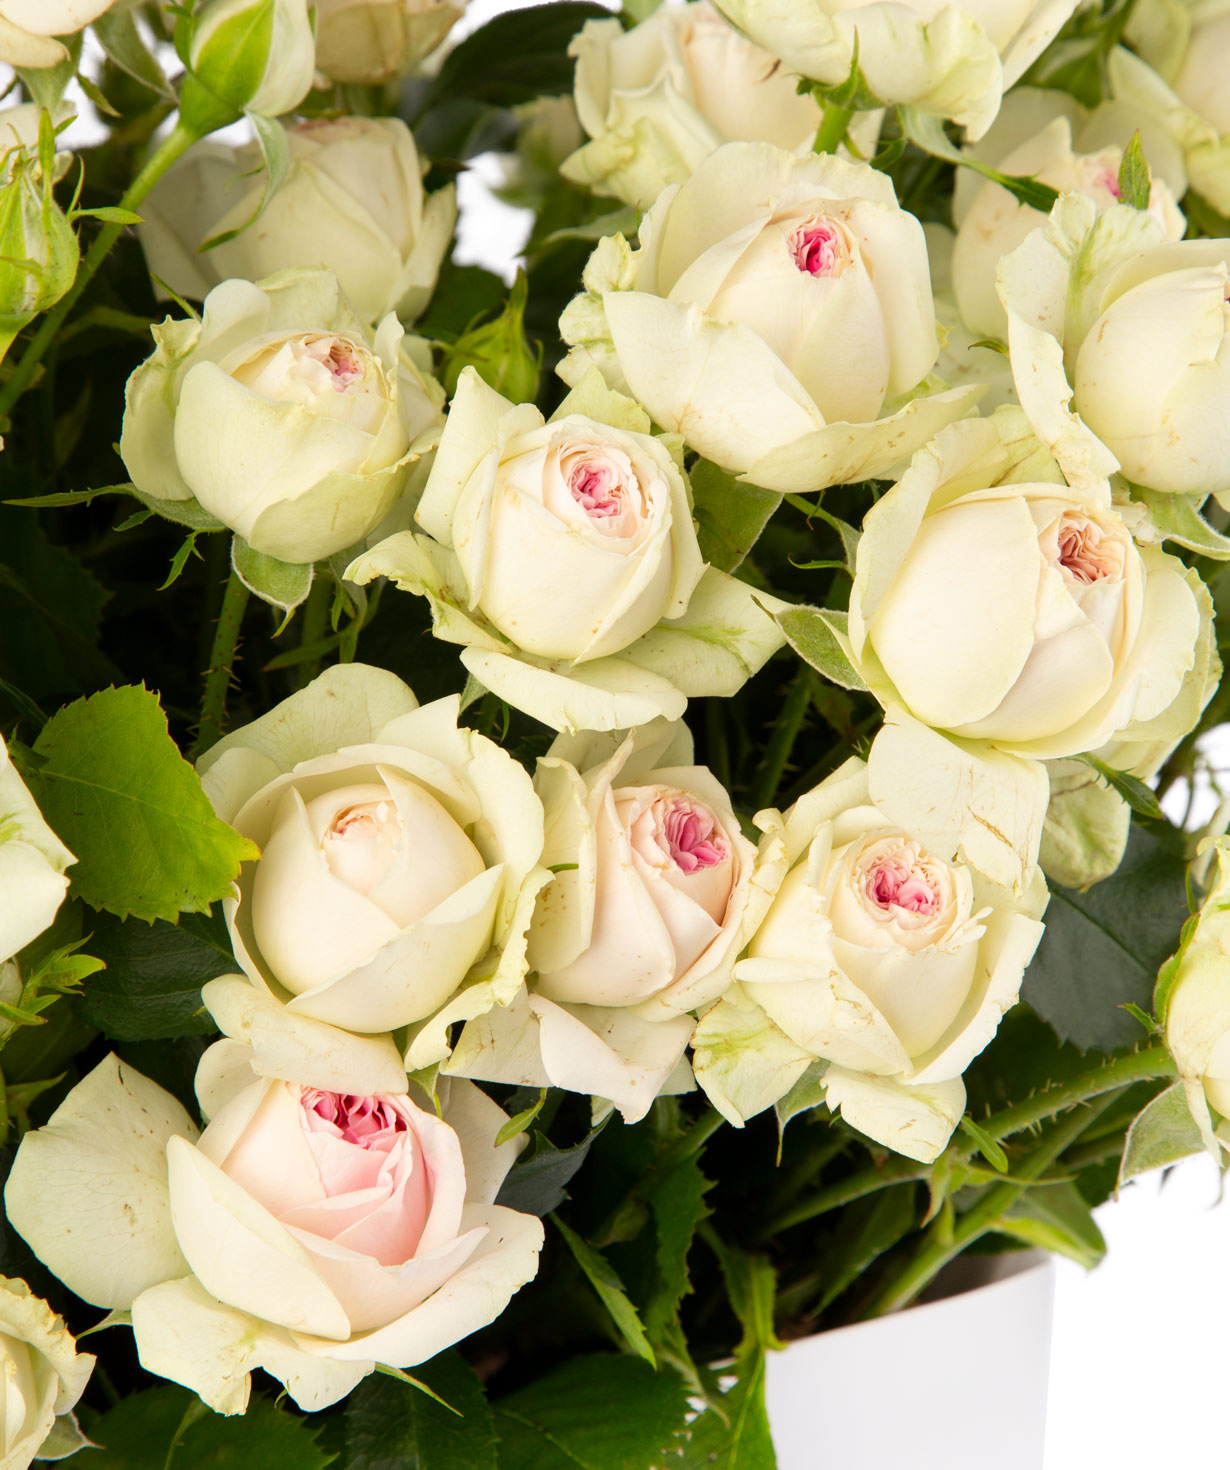 Composition `Prada` with bush roses